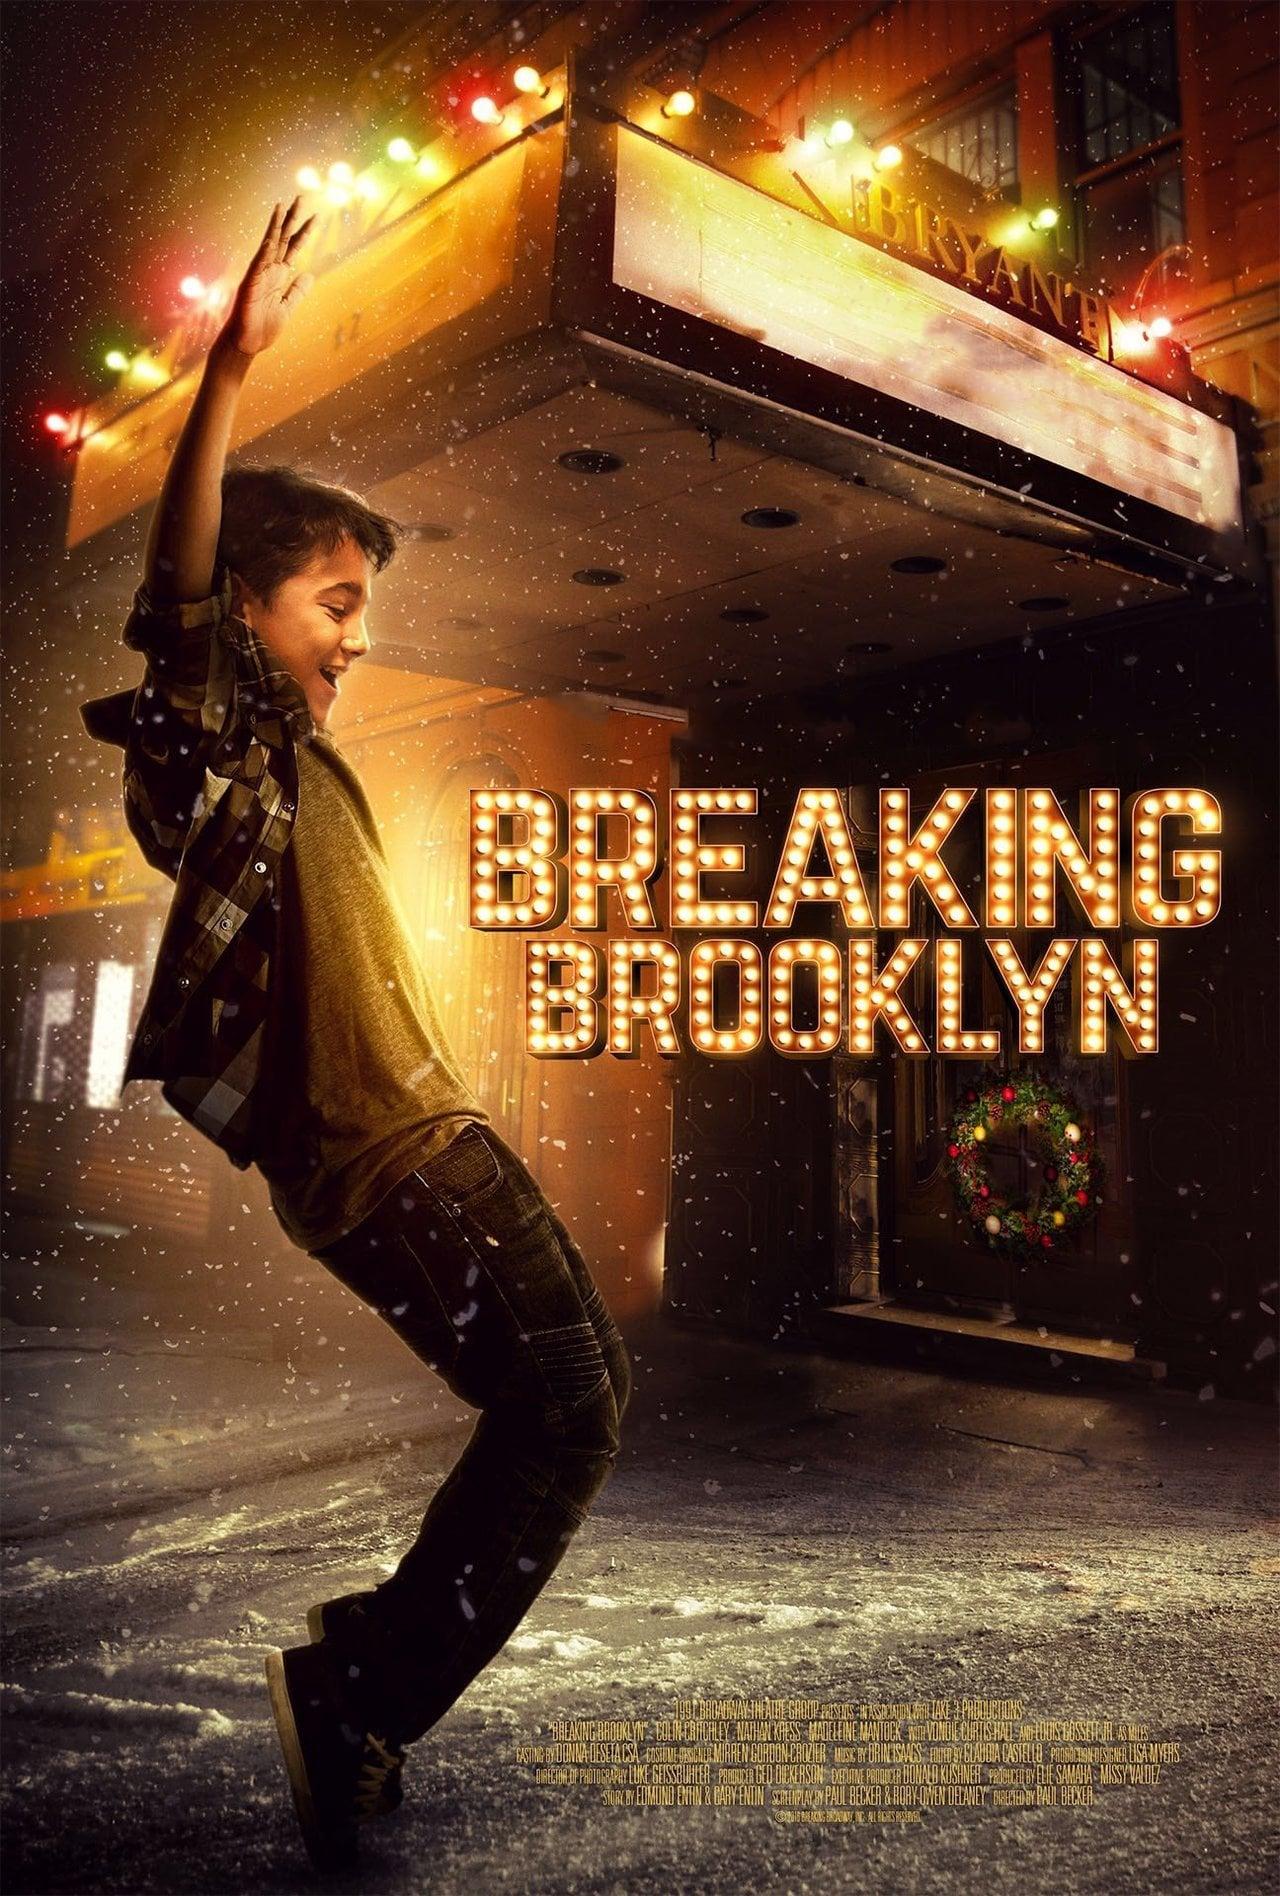 Breaking Brooklyn poster